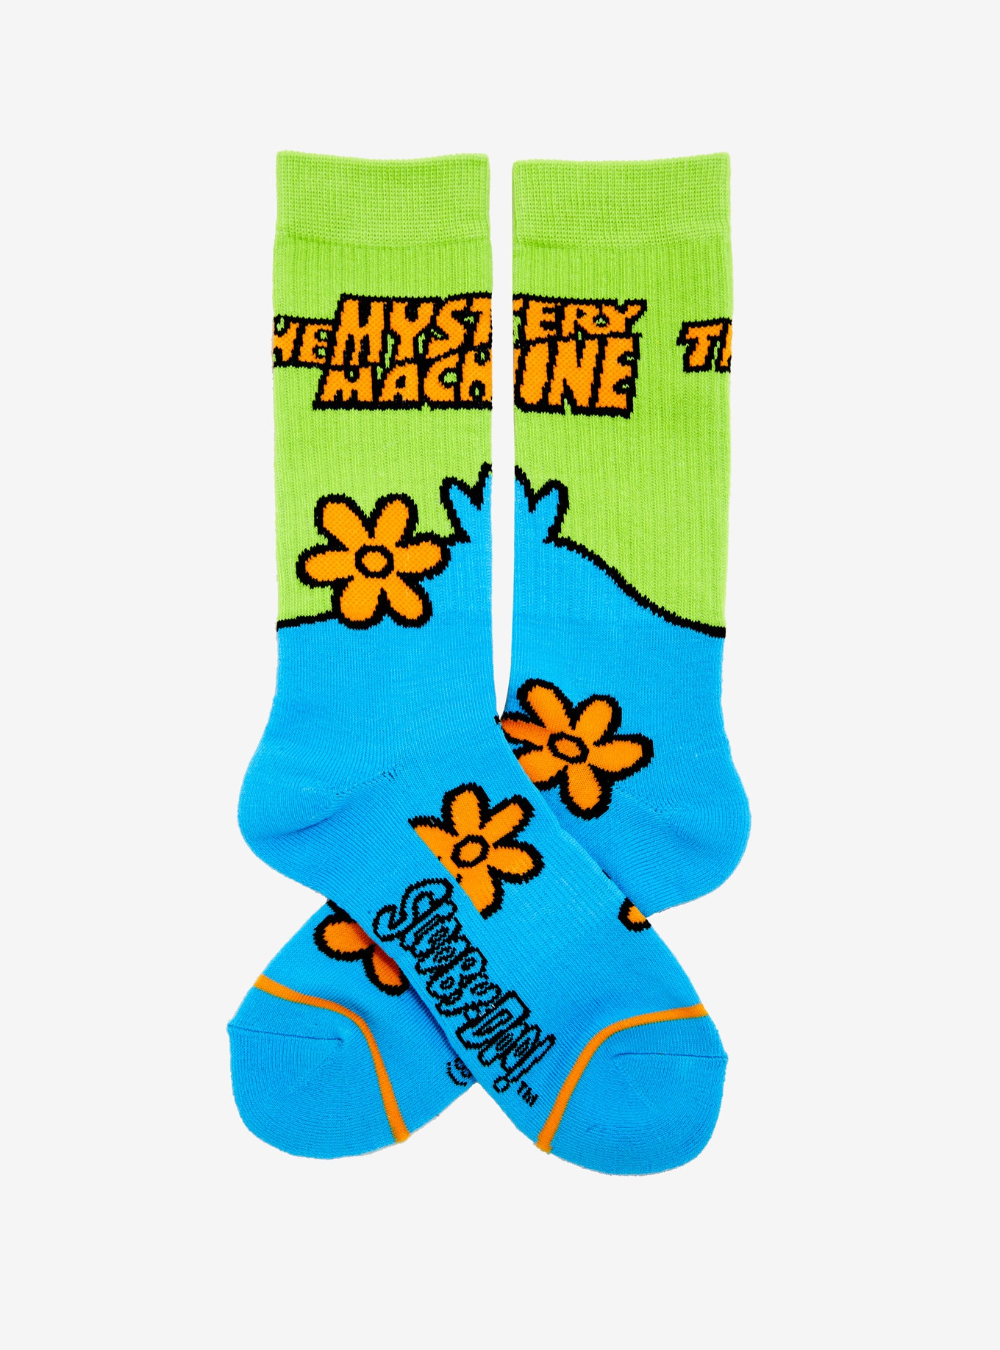 Scooby-Doo The Mystery Machine Crew Socks - Scooby-Doo The Mystery Machine Crew Socks -   18 fitness Outfits socks ideas